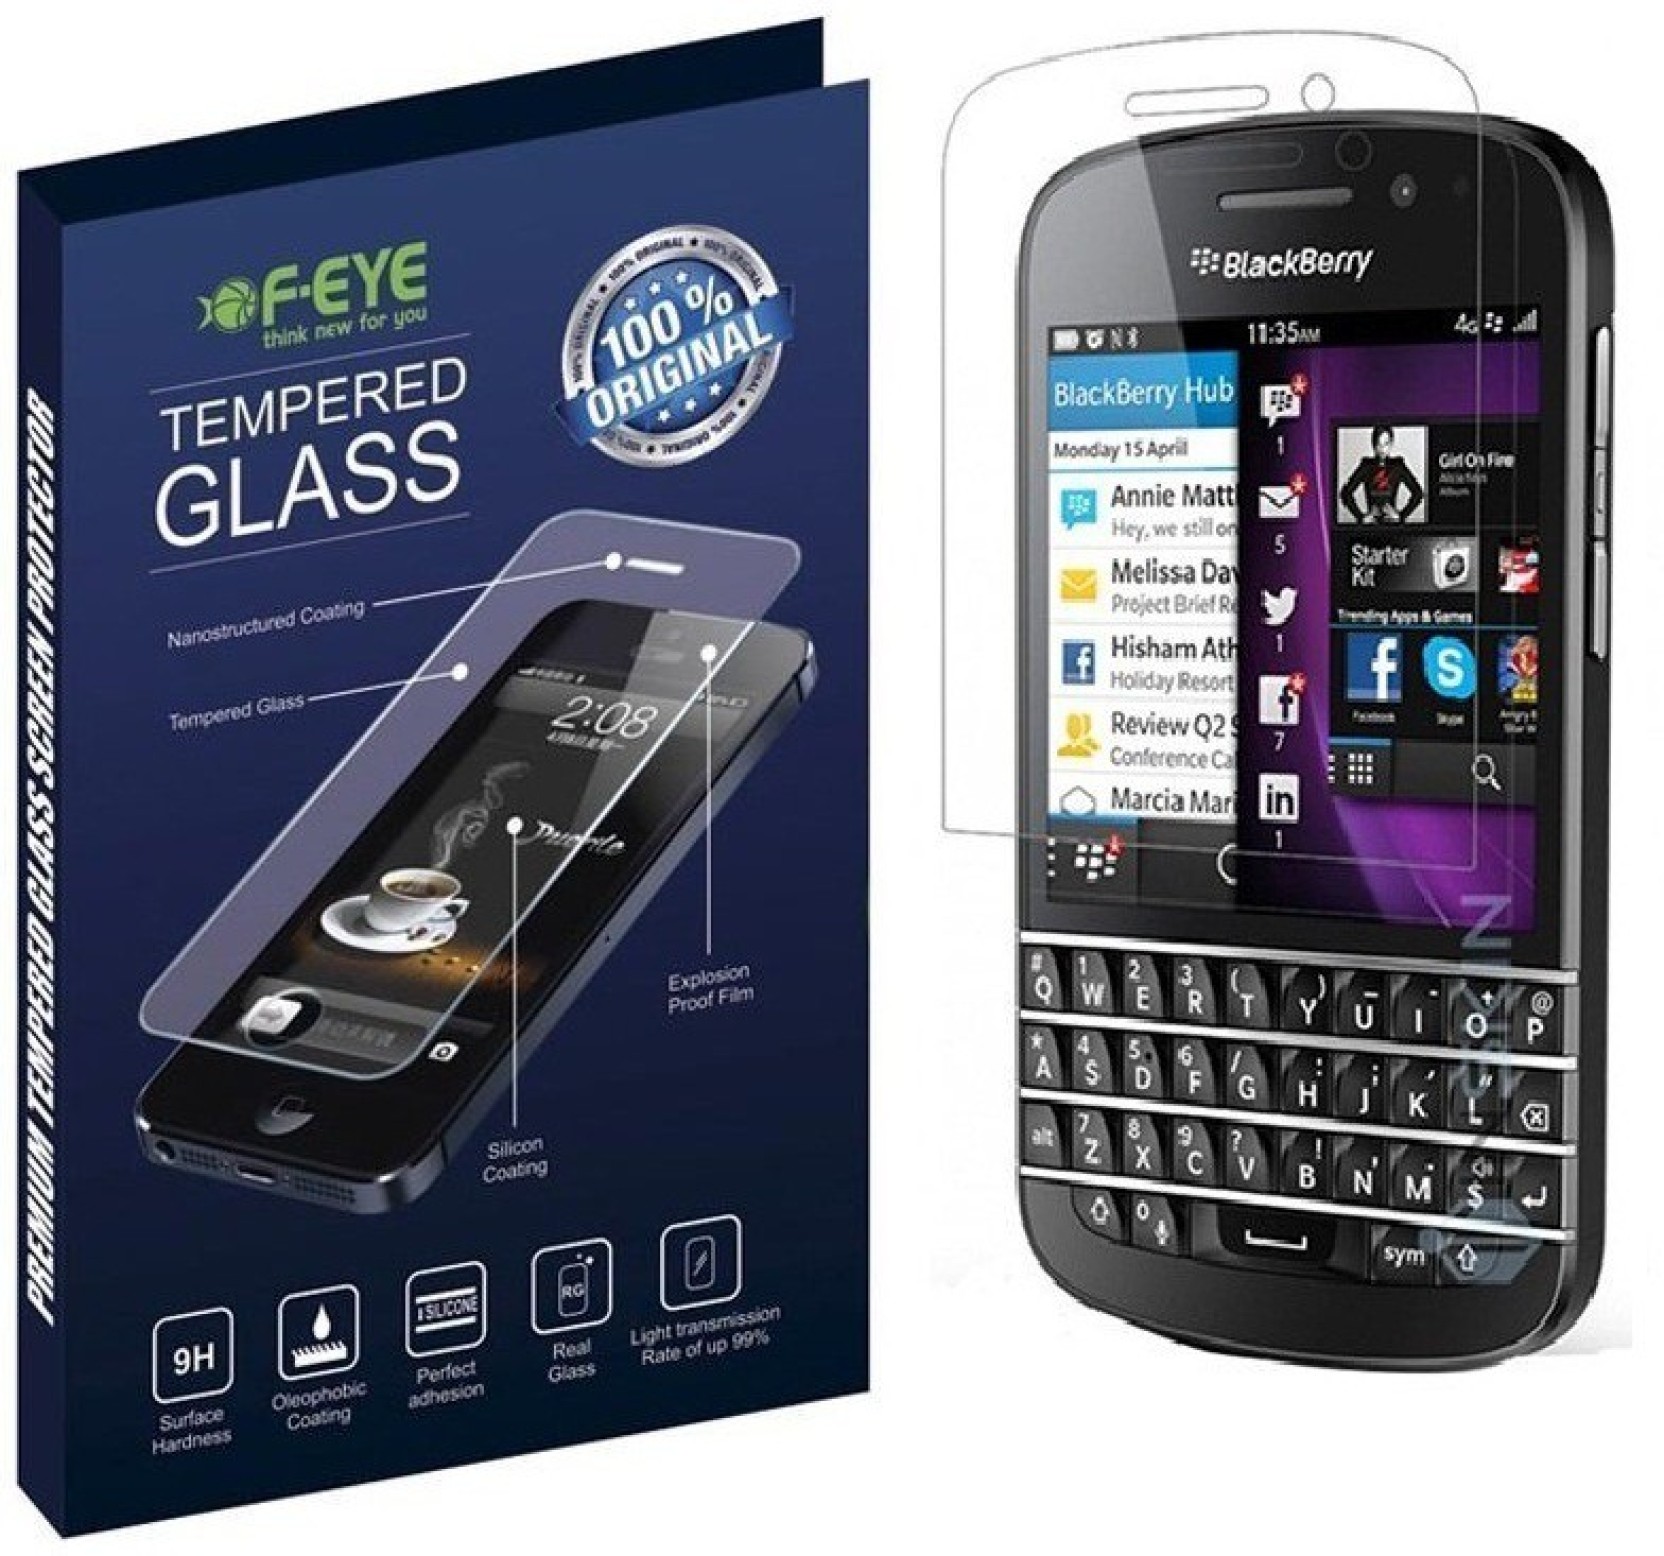 Opera Mini For Blackberry Q10 : Скачать бесплатно Opera Mini for BlackBerry : Çünkü blackberry ...